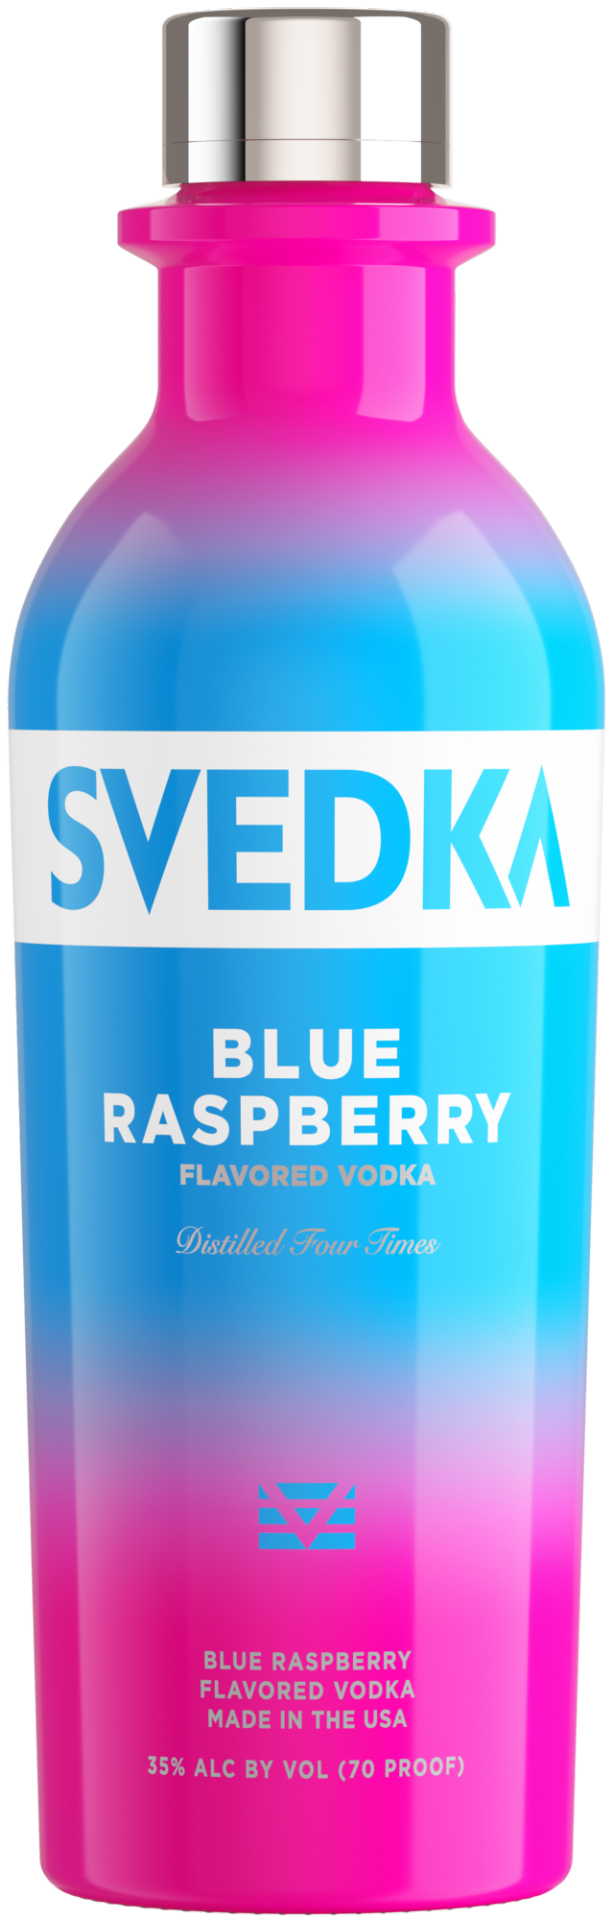 Svedka Blue Raspberry Flavored Vodka 70 Proof 375 Ml Shipt 5001